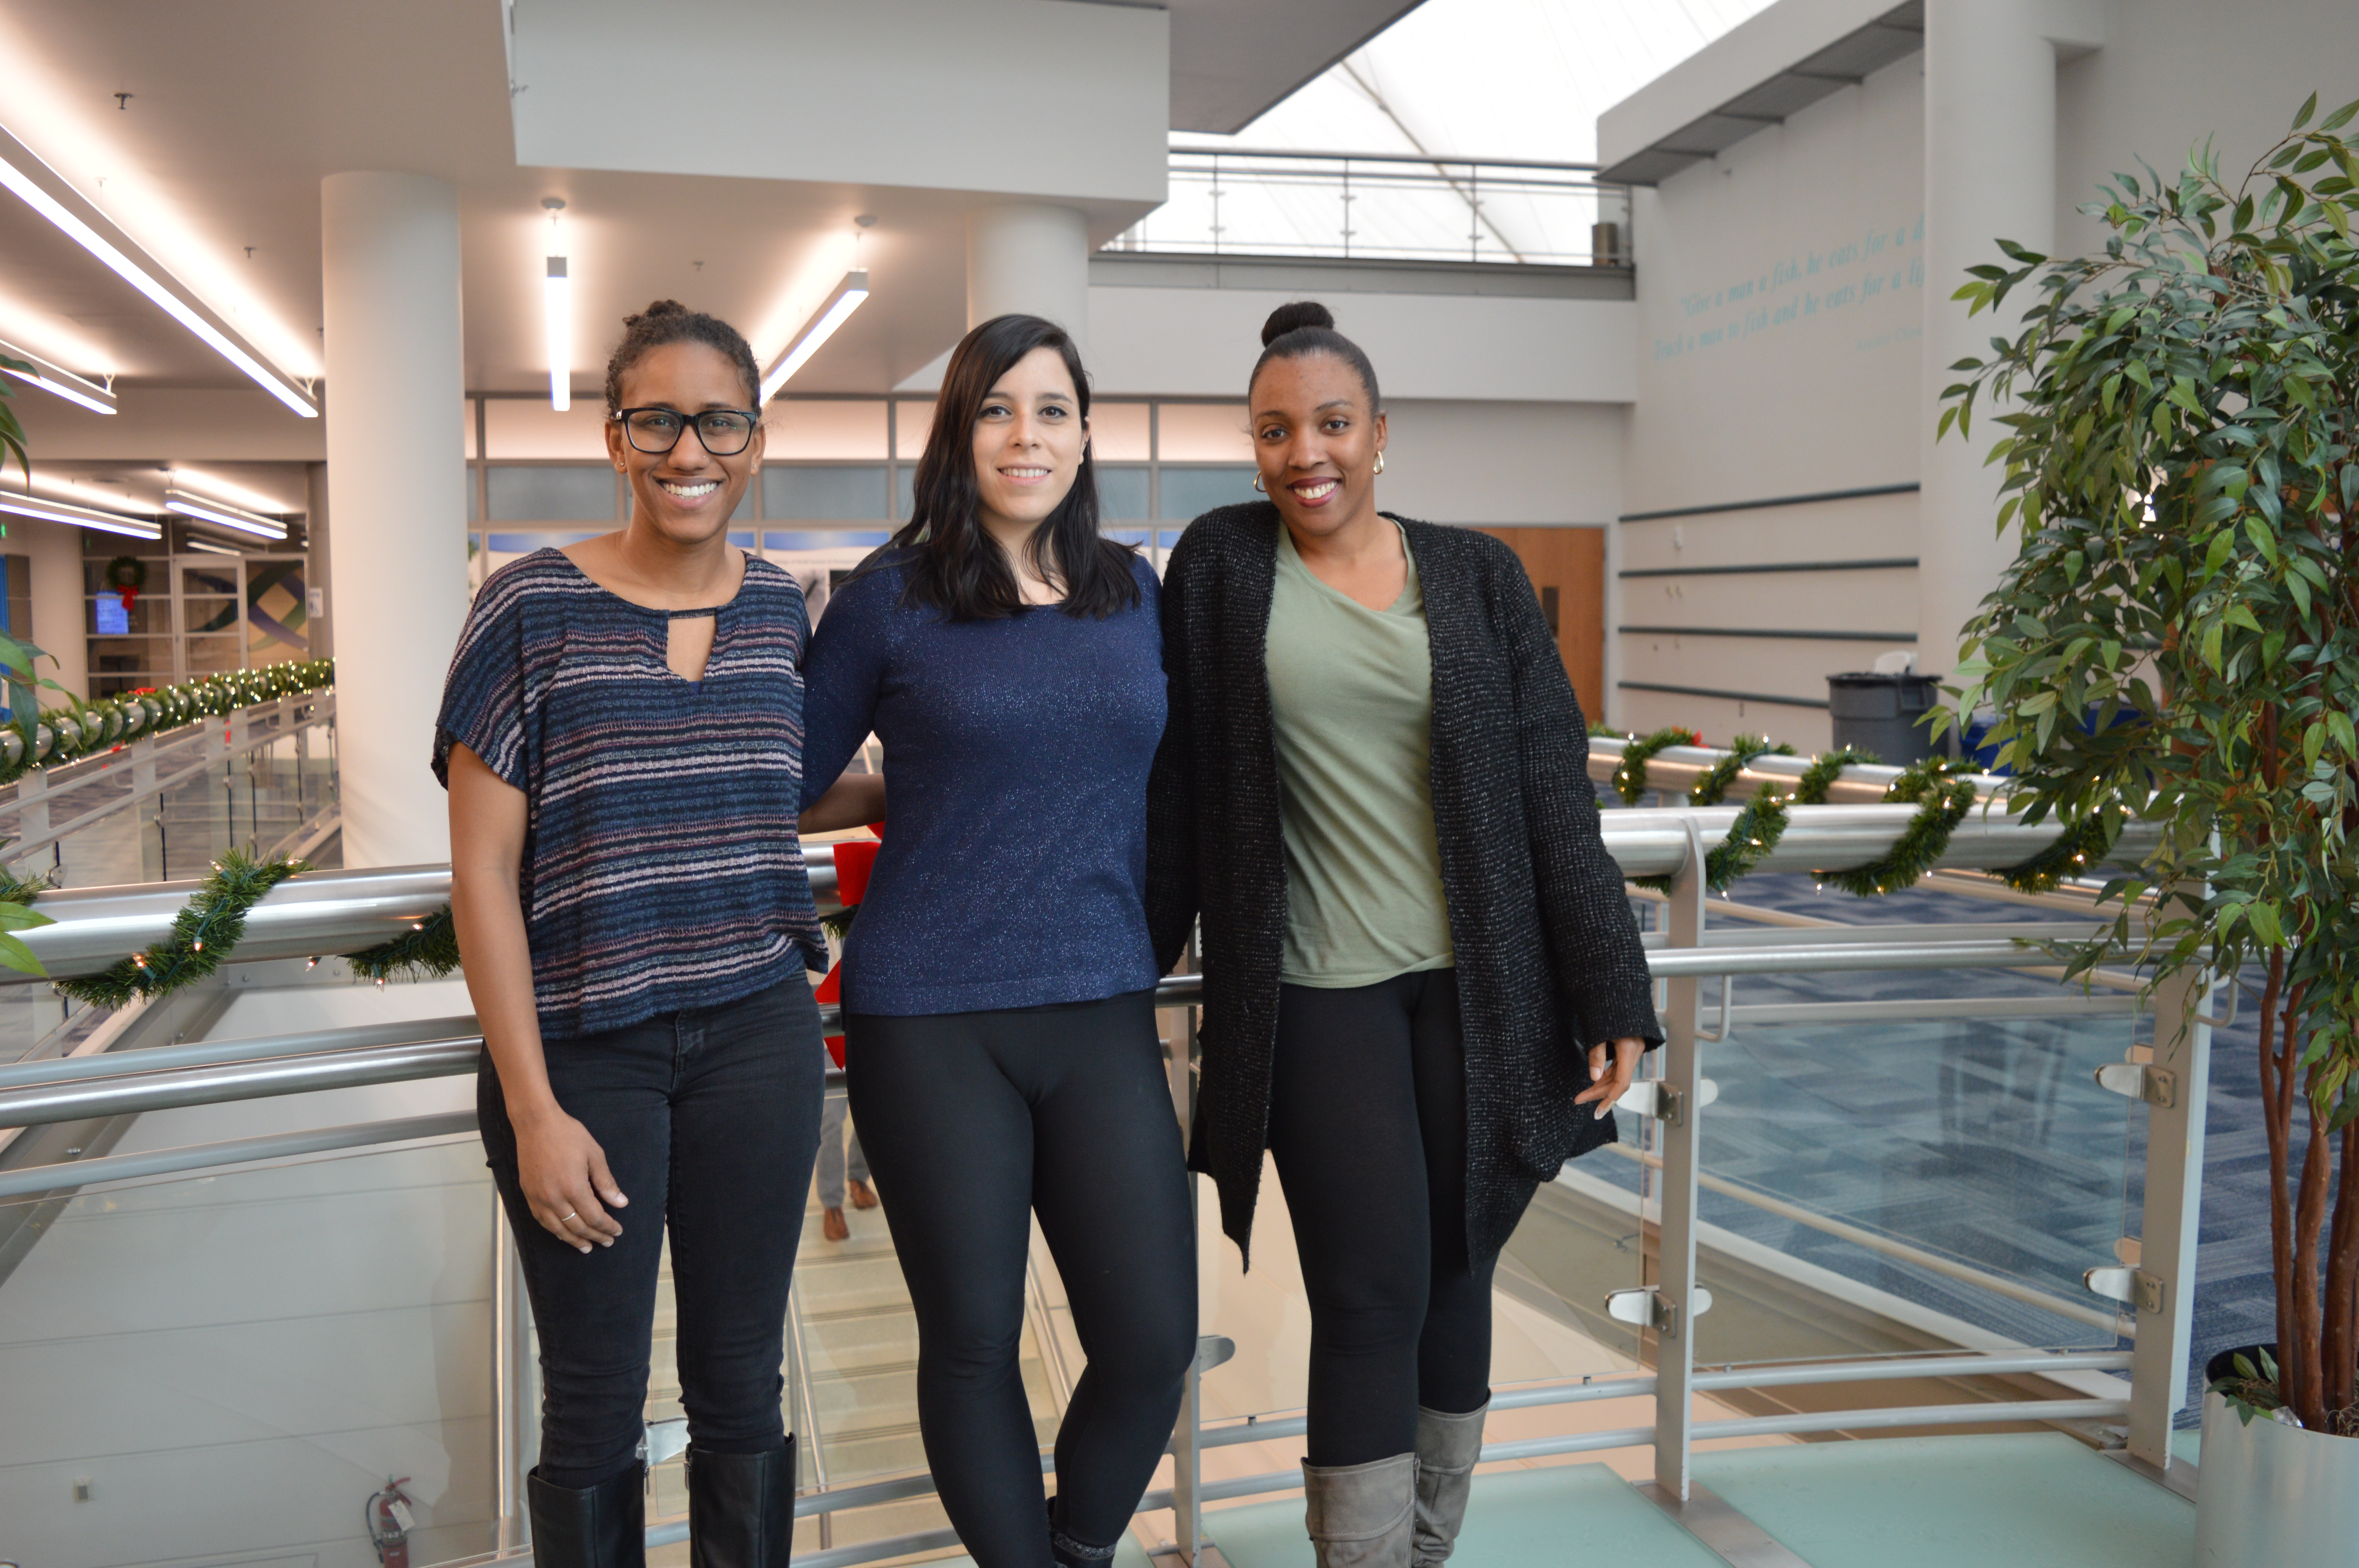 IMET students Ana Sosa, Shadaesha Green, and Amanda Lawrence